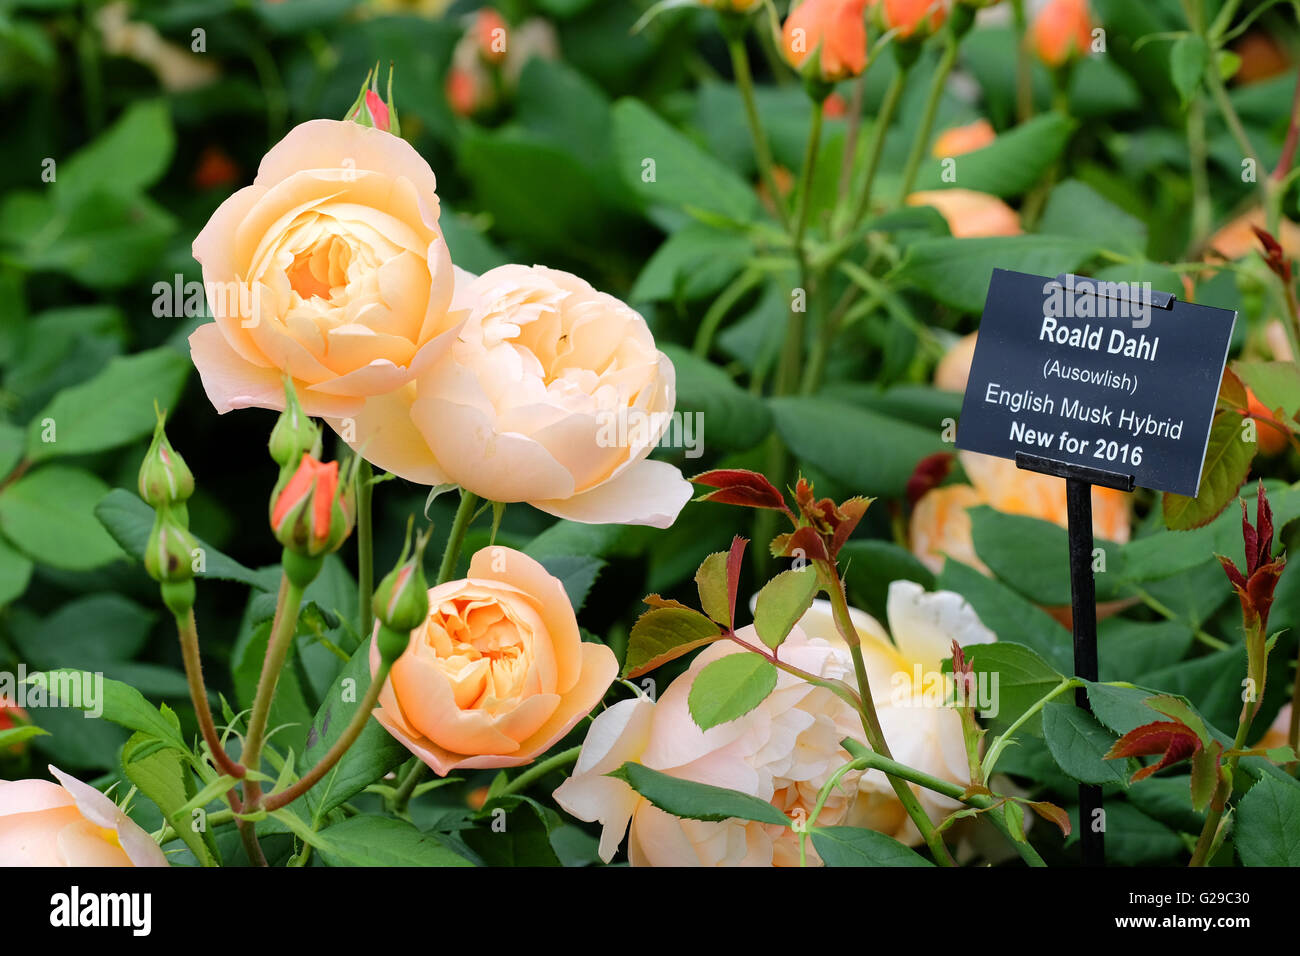 Roald dahl rose hi-res stock photography and images - Alamy